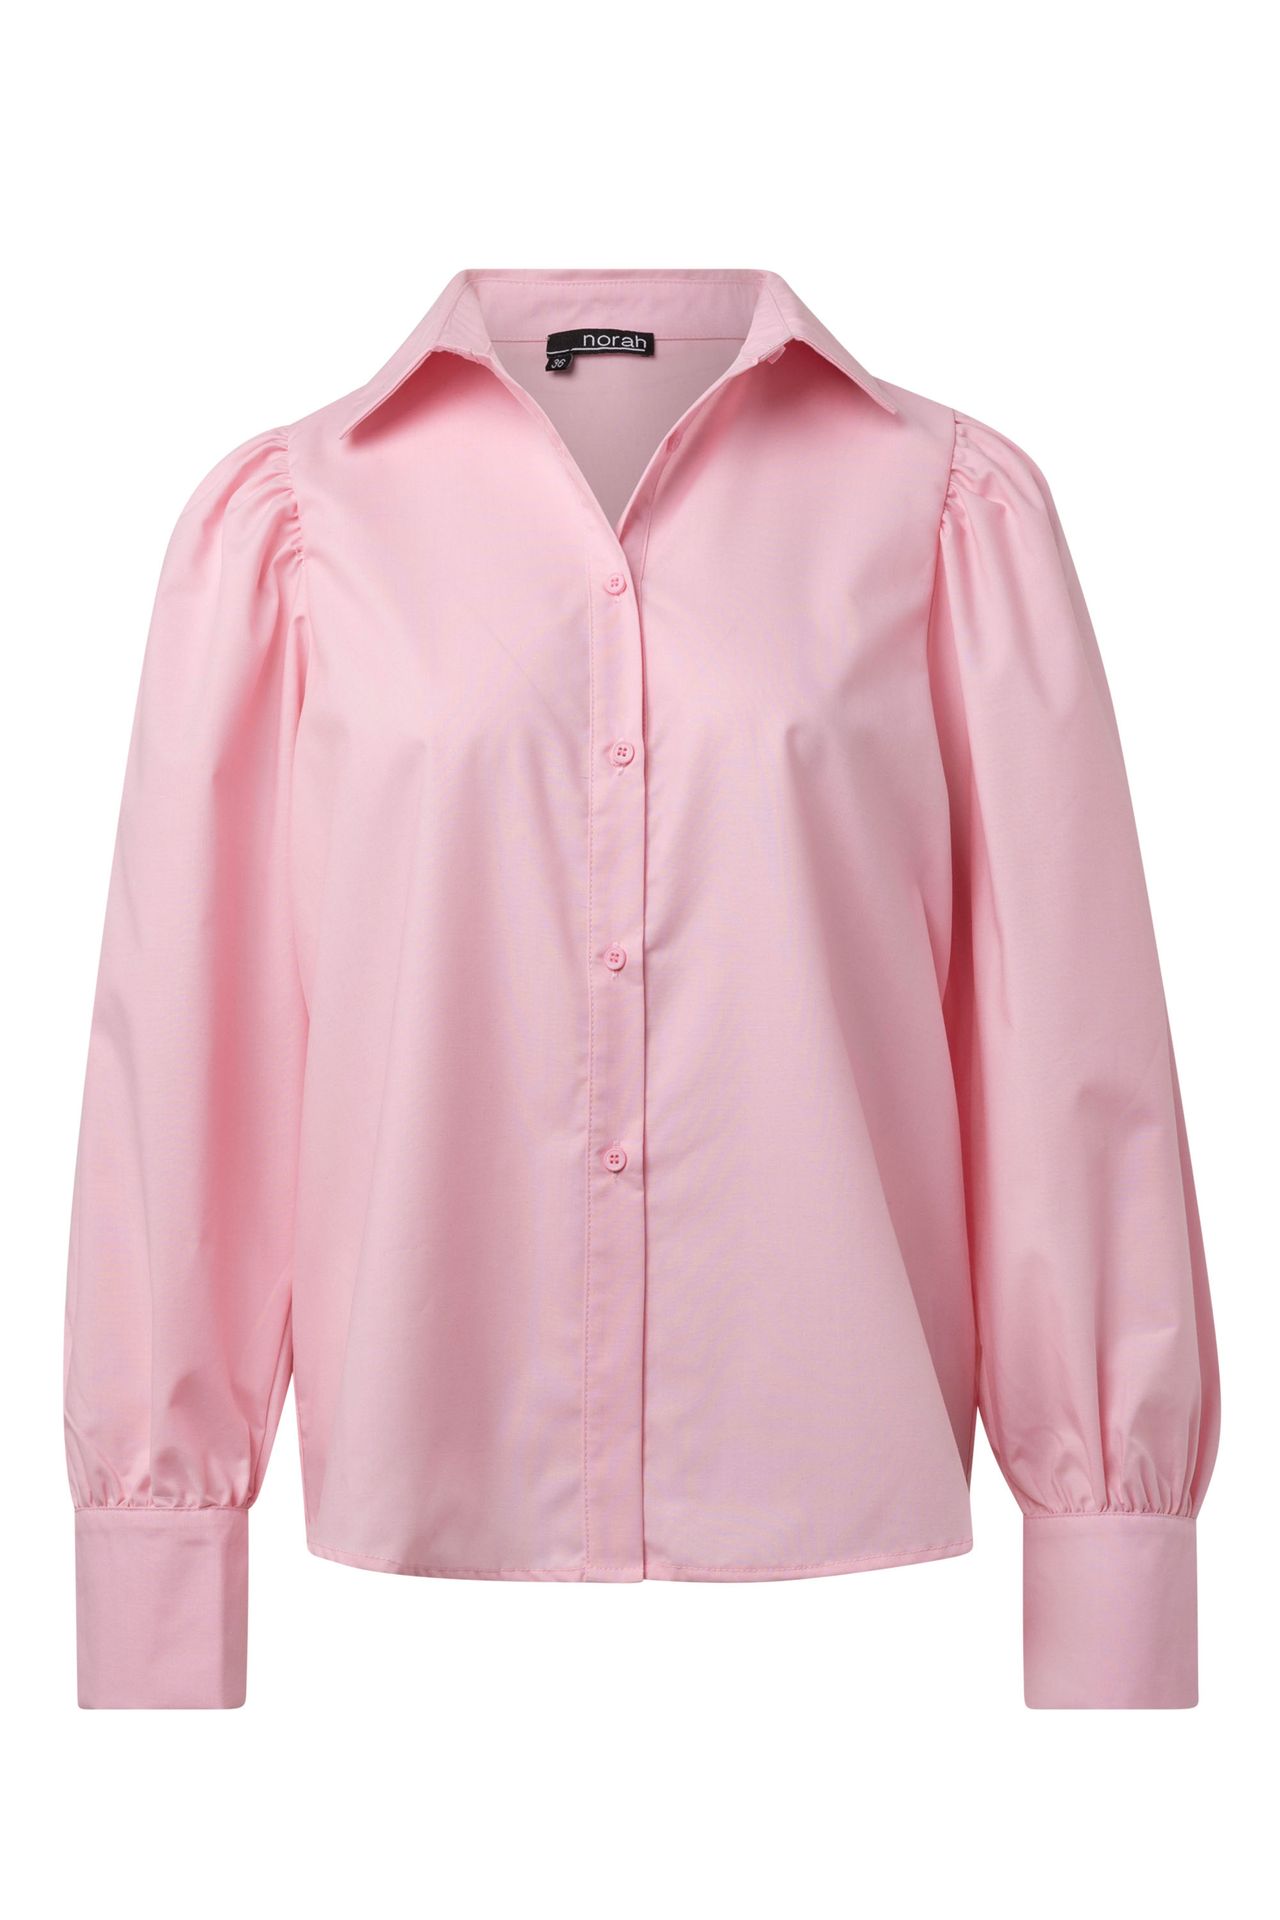 Norah Roze blouse rose 214553-907